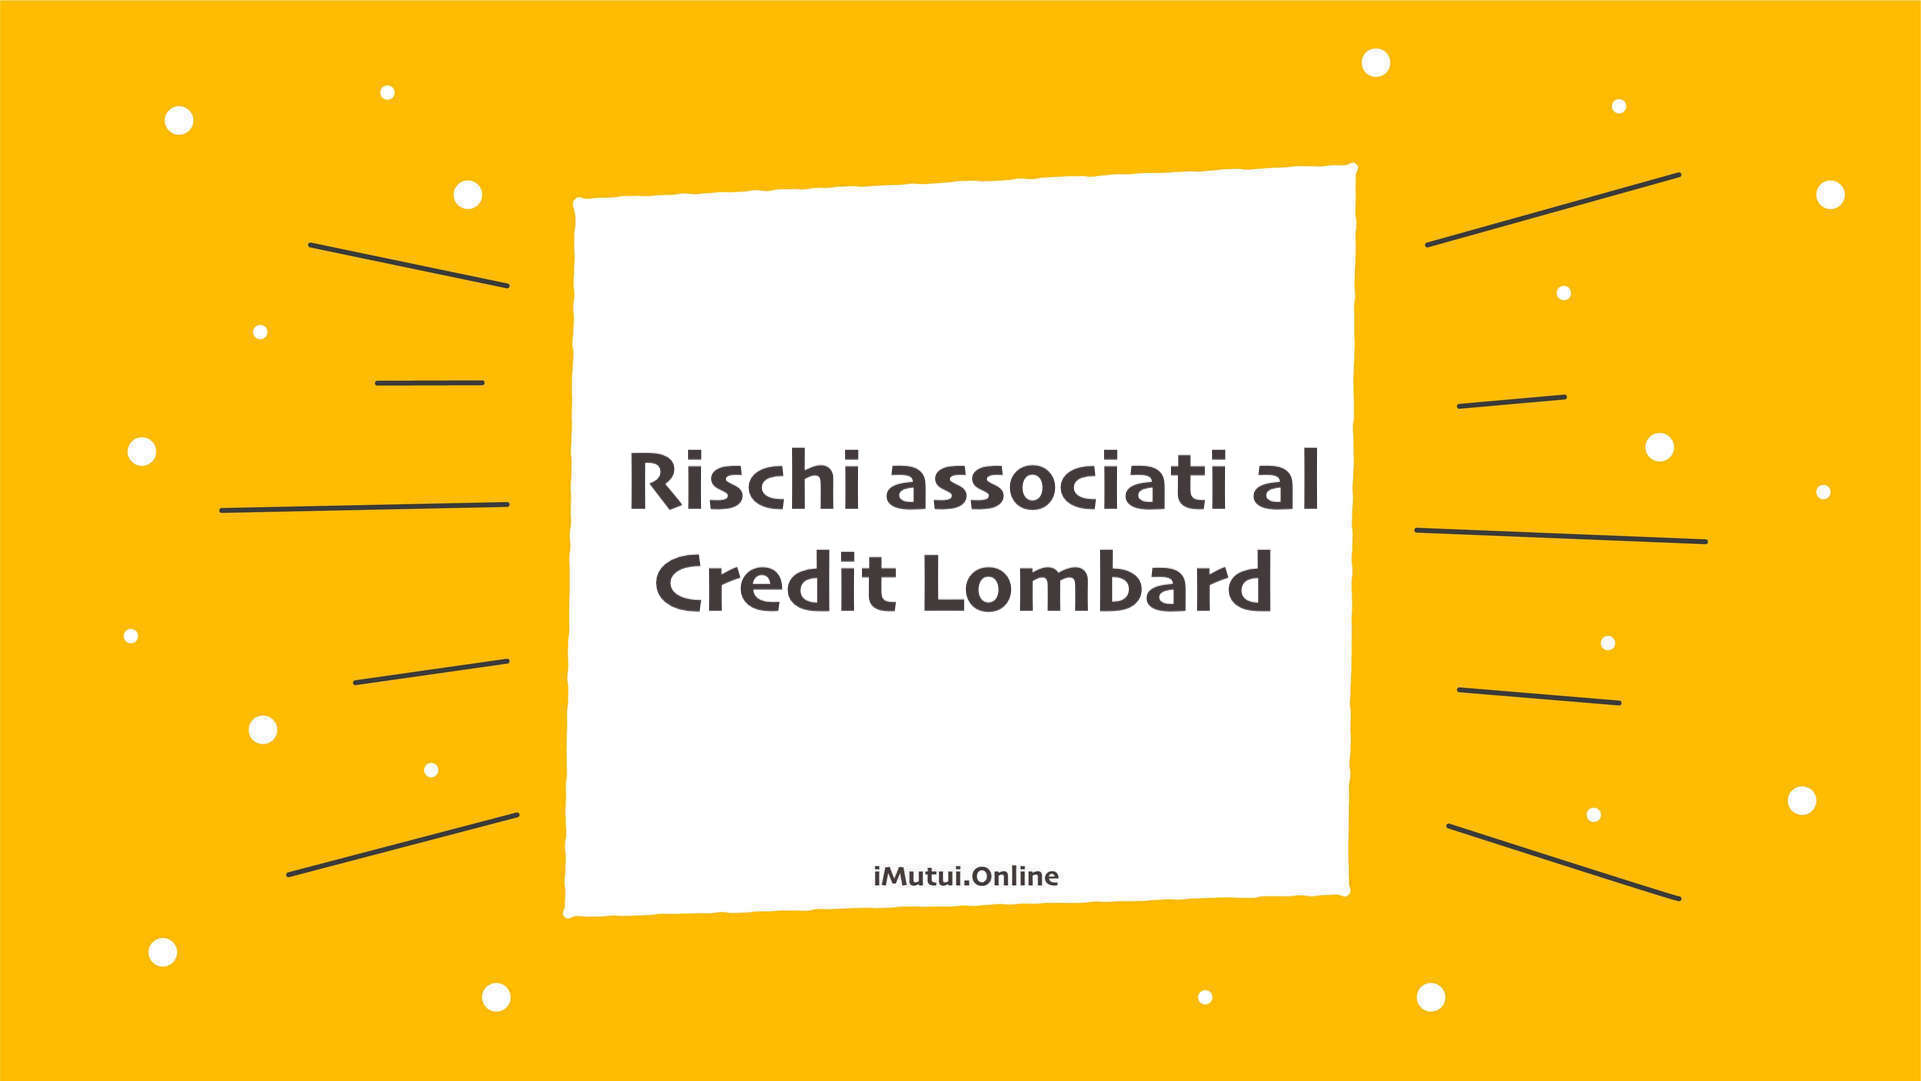 Rischi associati al Credit Lombard